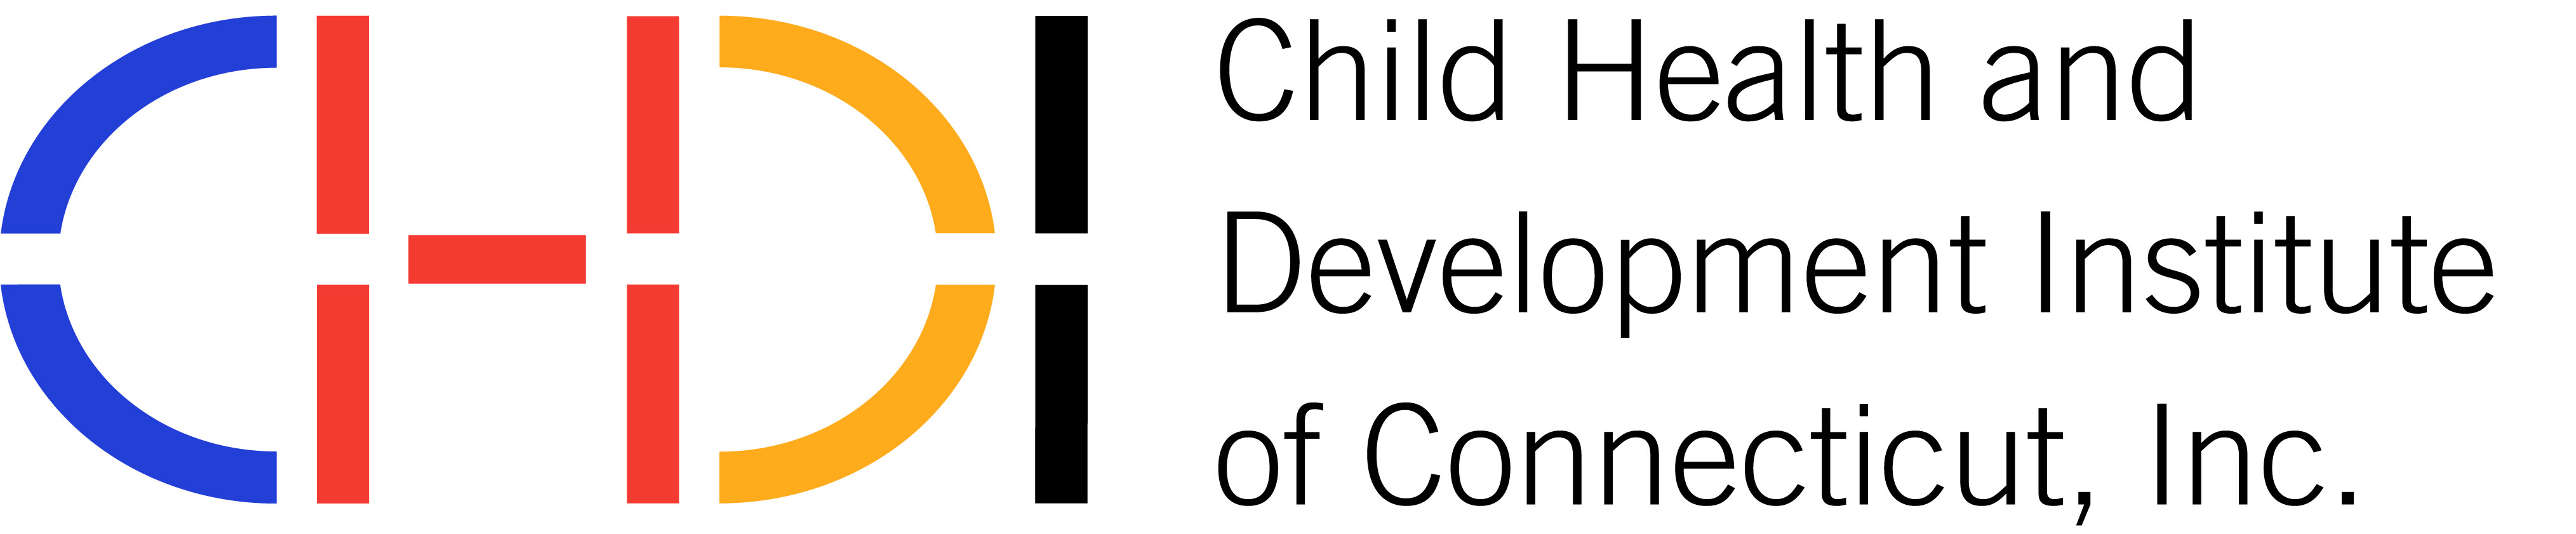 Child Health and Development Institute of Connecticut, Inc.